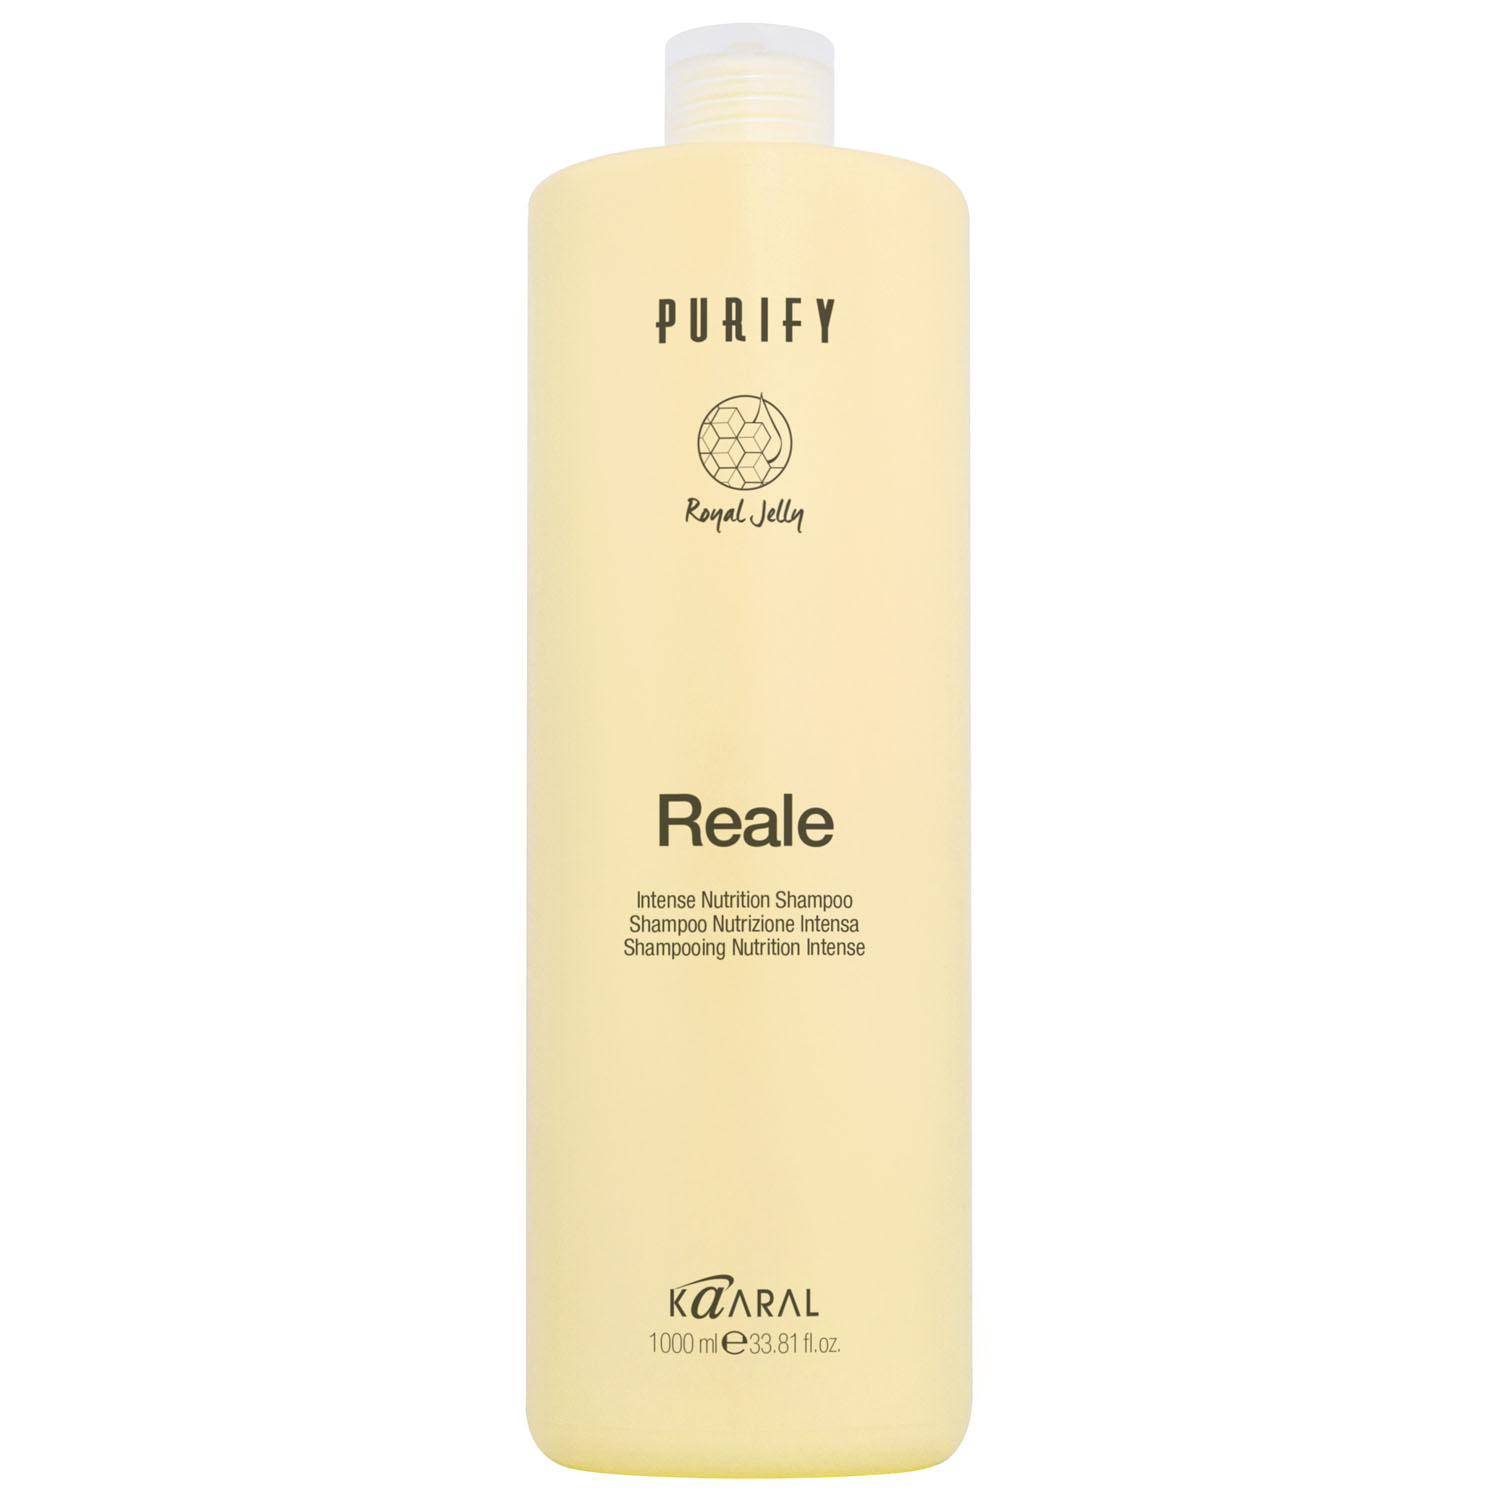 Kaaral Восстанавливающий шампунь для поврежденных волос Intense Nutrition Shampoo, 1000 мл (Kaaral, Purify) kaaral восстанавливающий шампунь для поврежденных волос intense nutrition shampoo 1000 мл kaaral purify